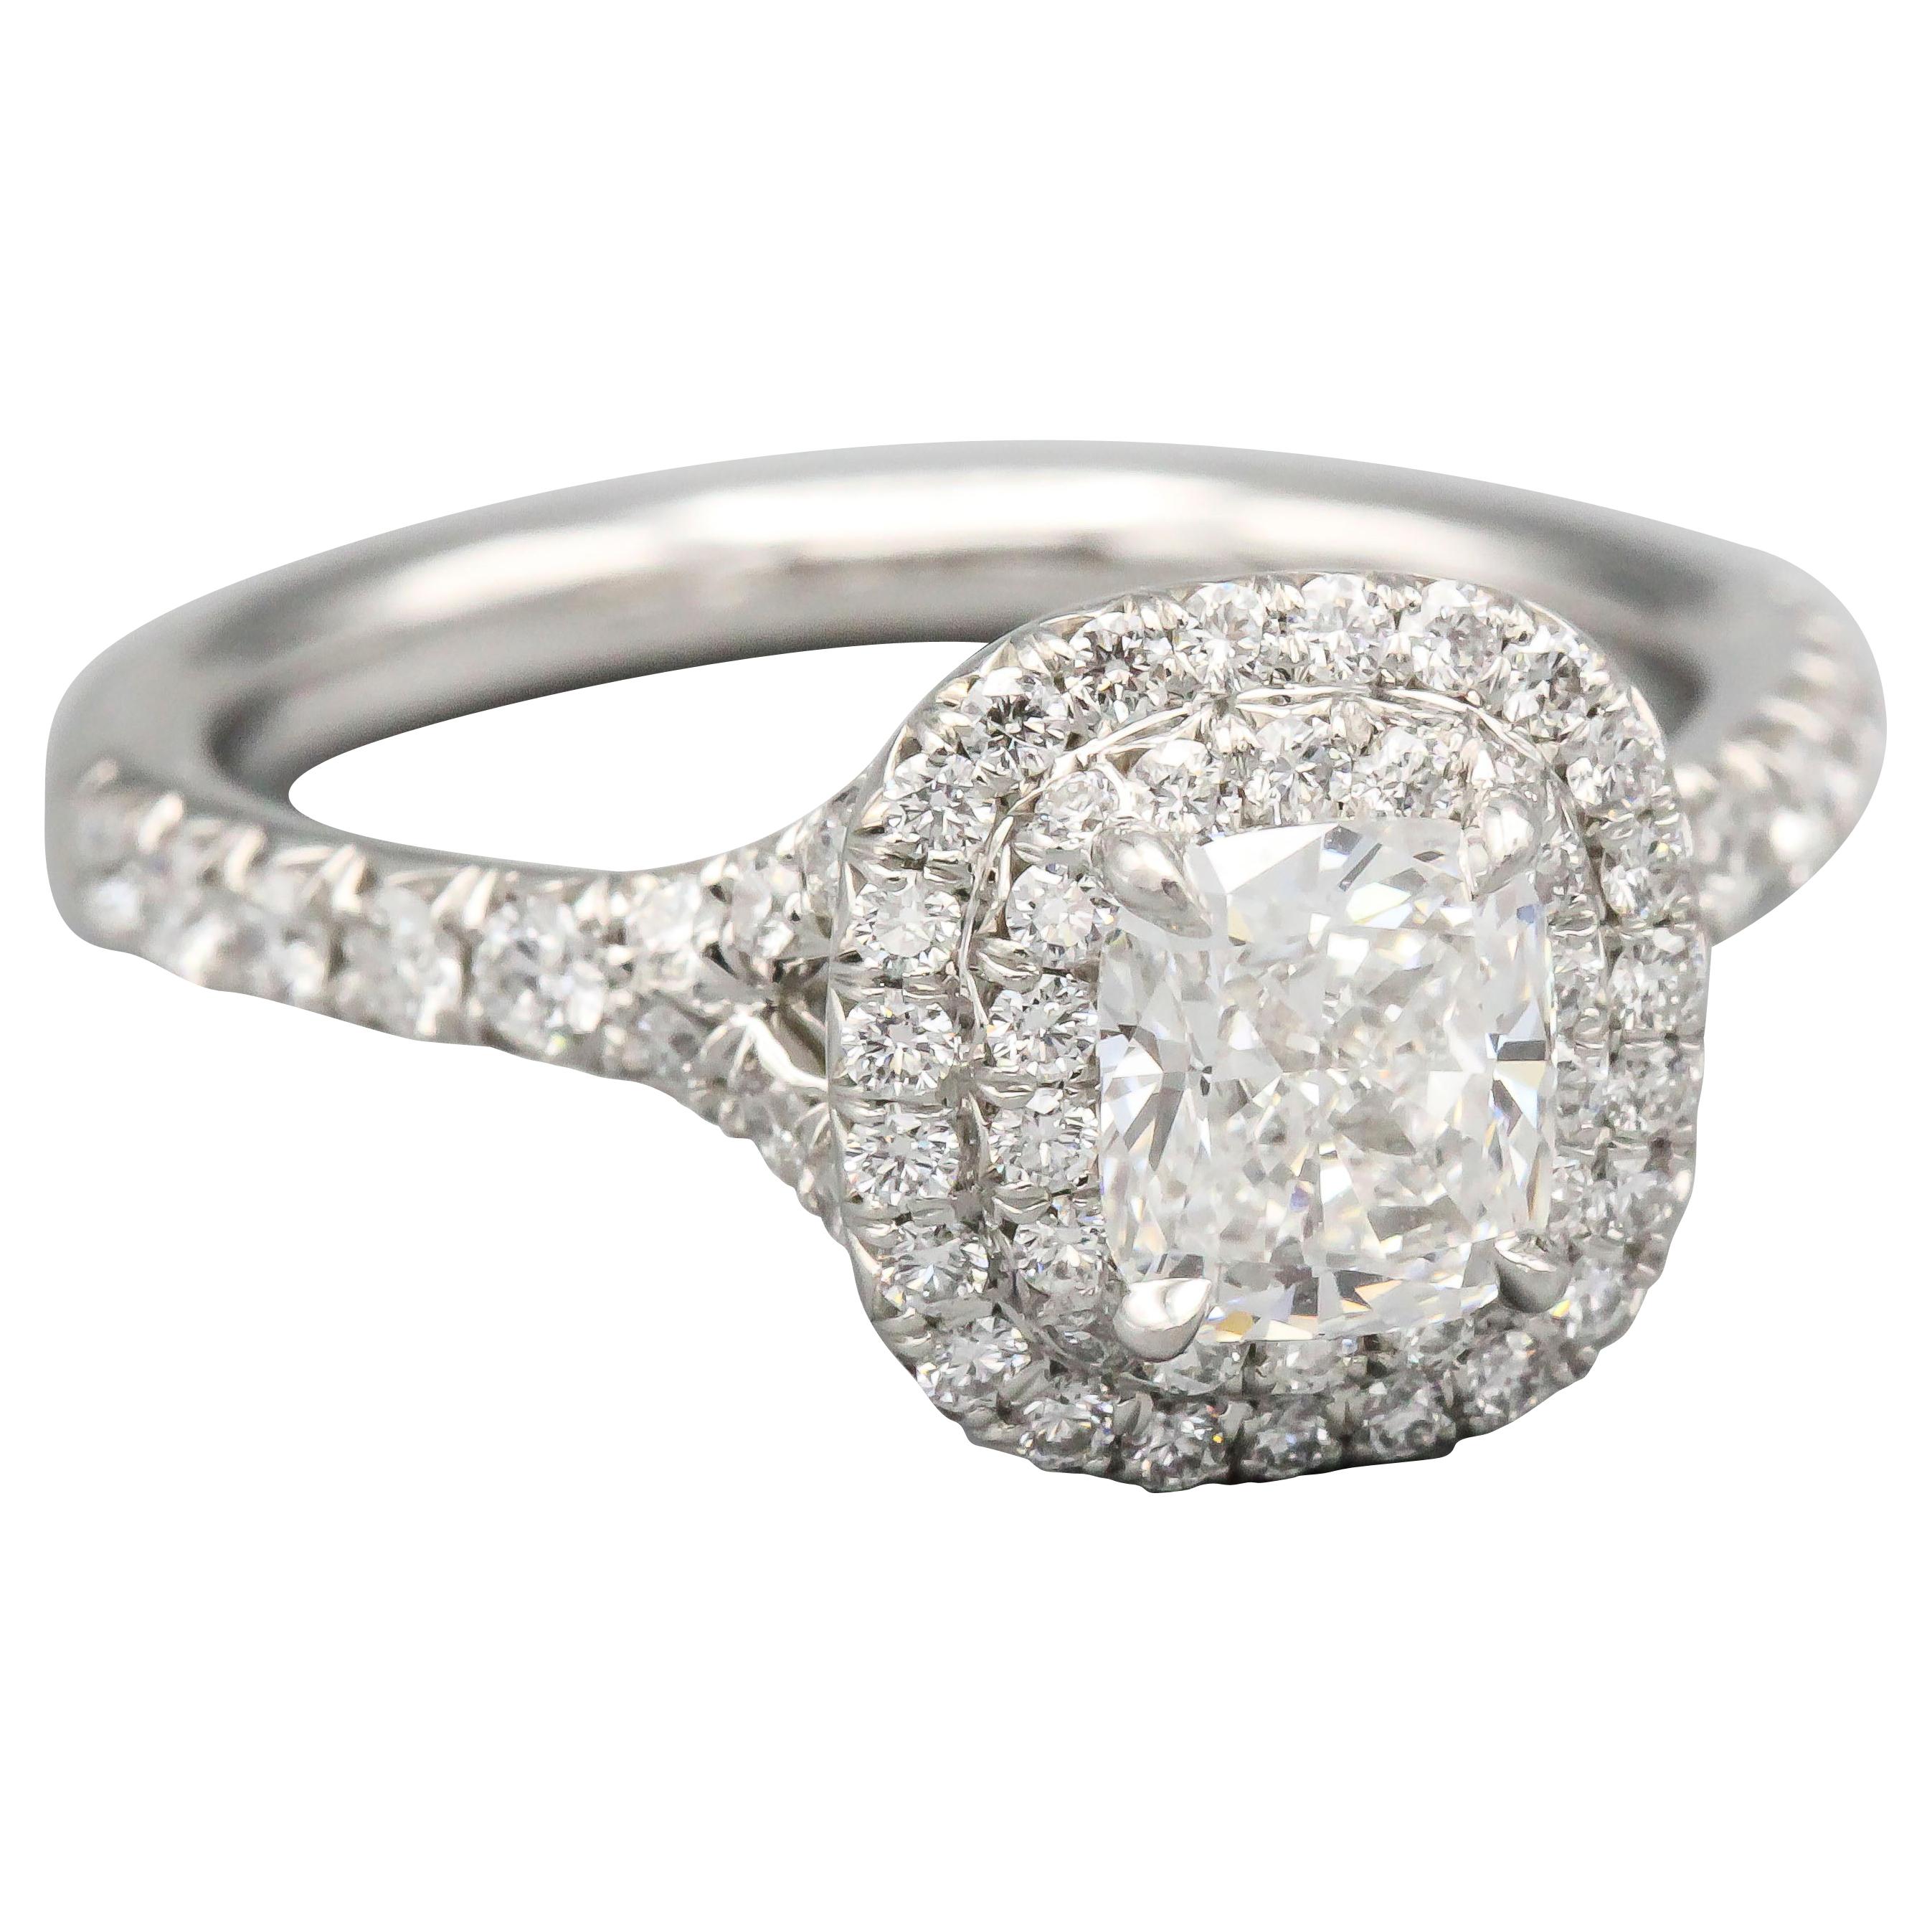 Tiffany & Co. Diamond and Platinum Engagement Ring